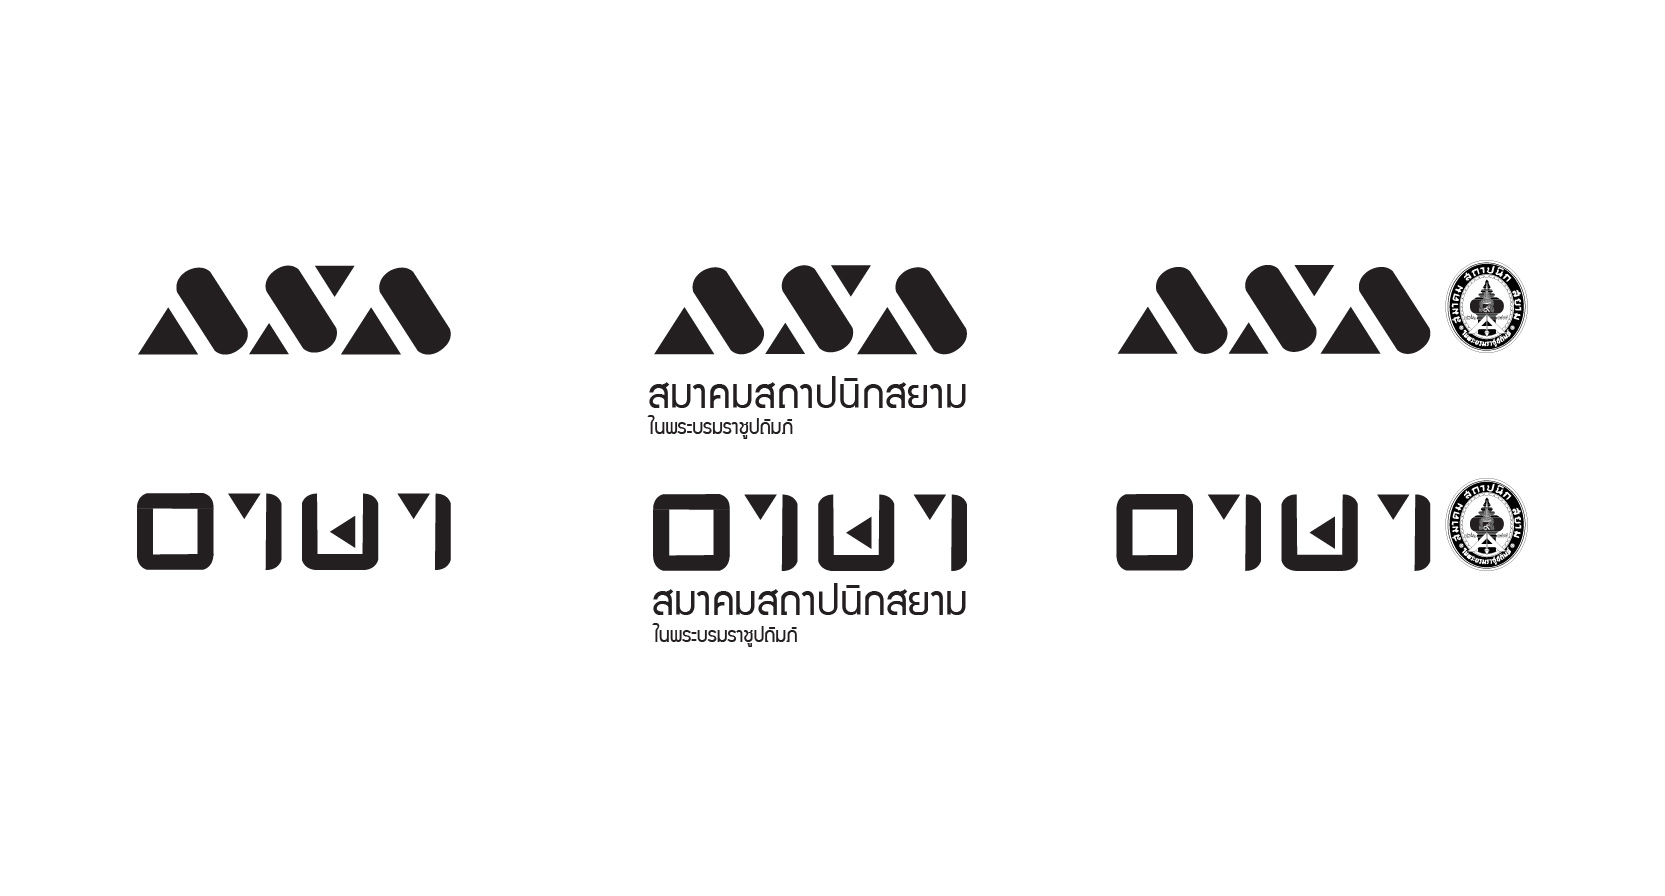 logo variations in white background